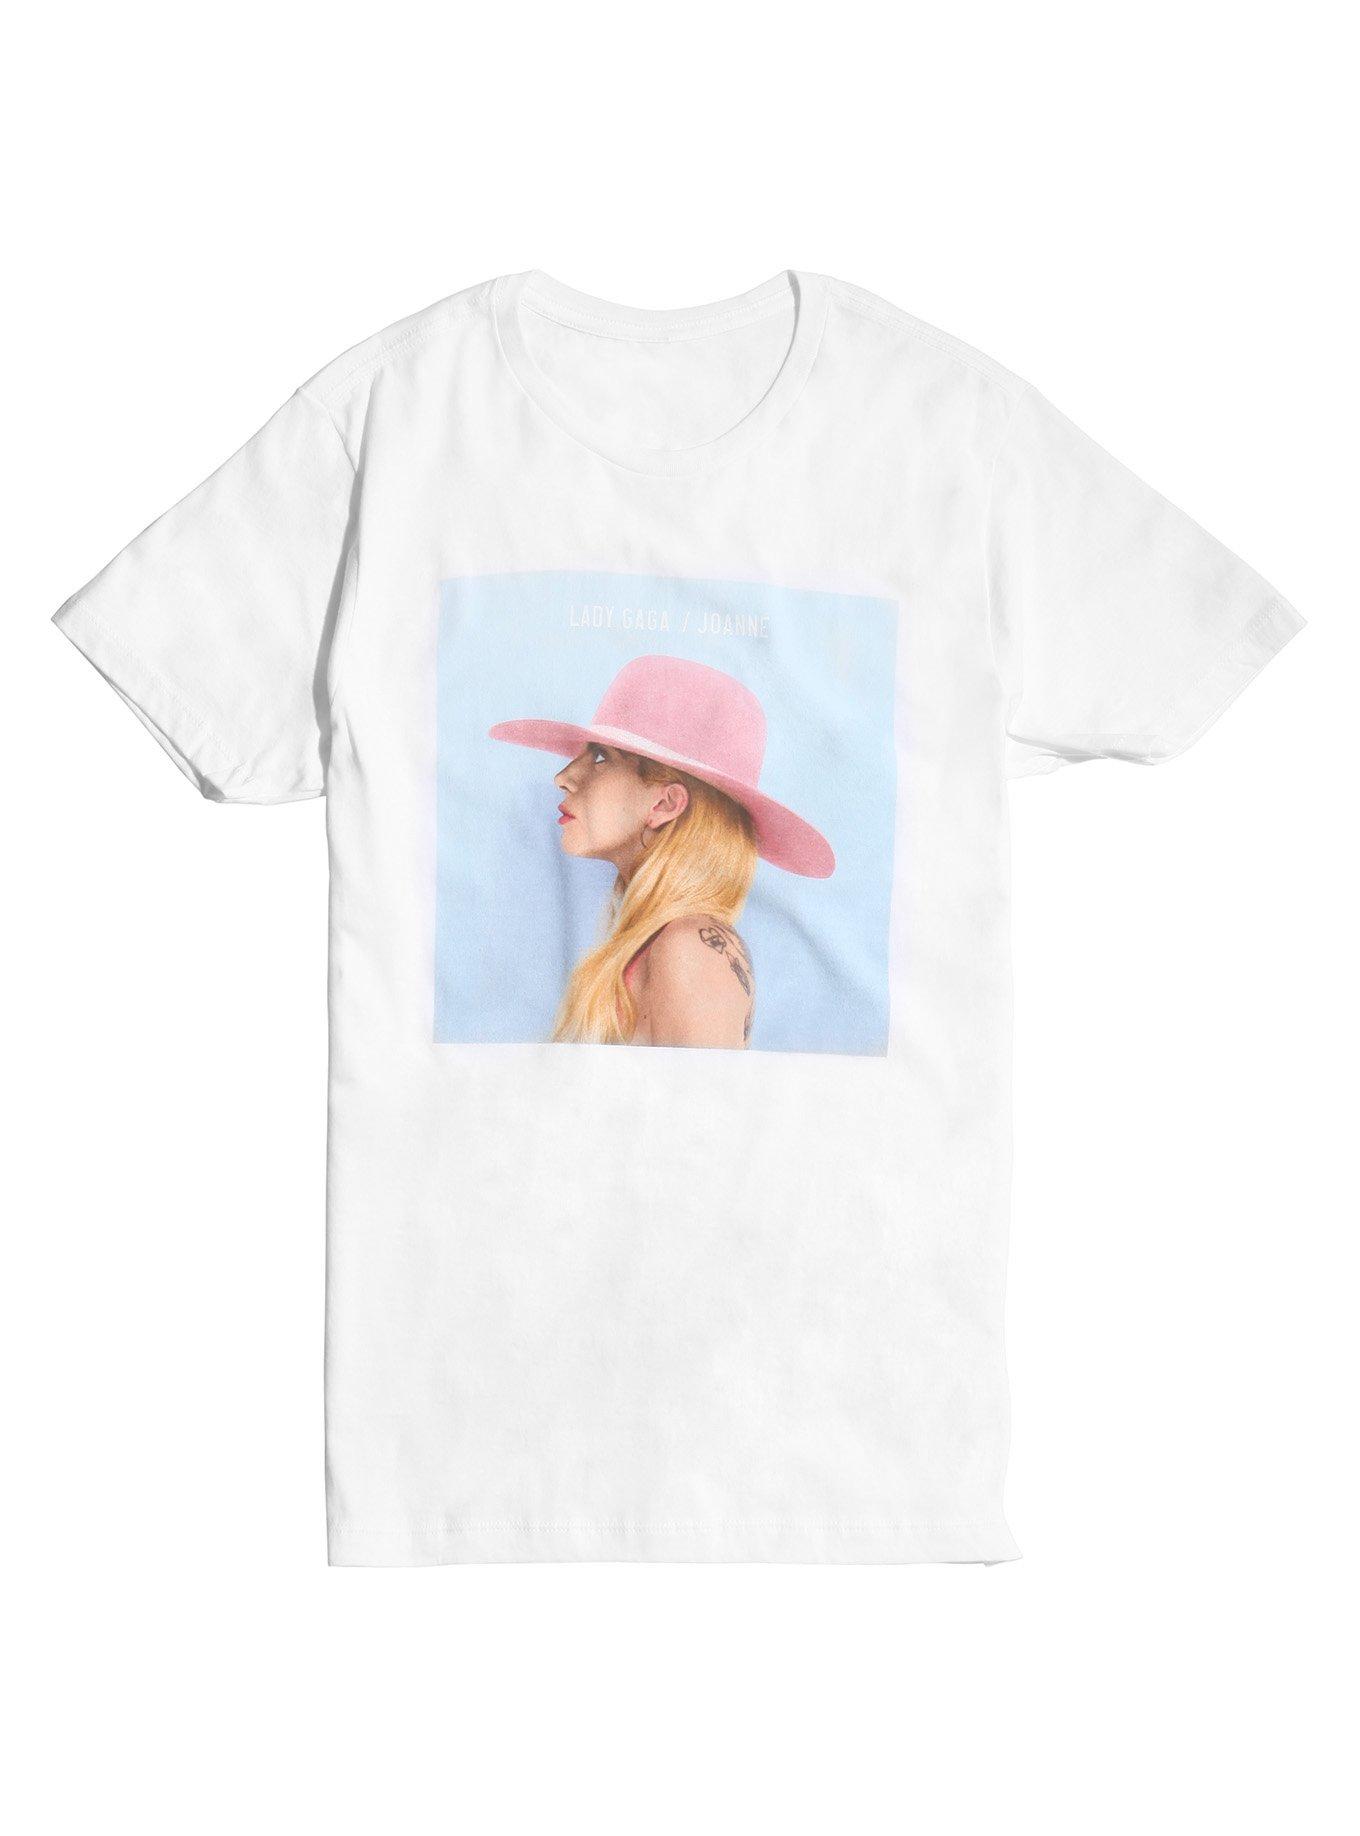 Lady Gaga Joanne Album Cover T-Shirt, WHITE, hi-res